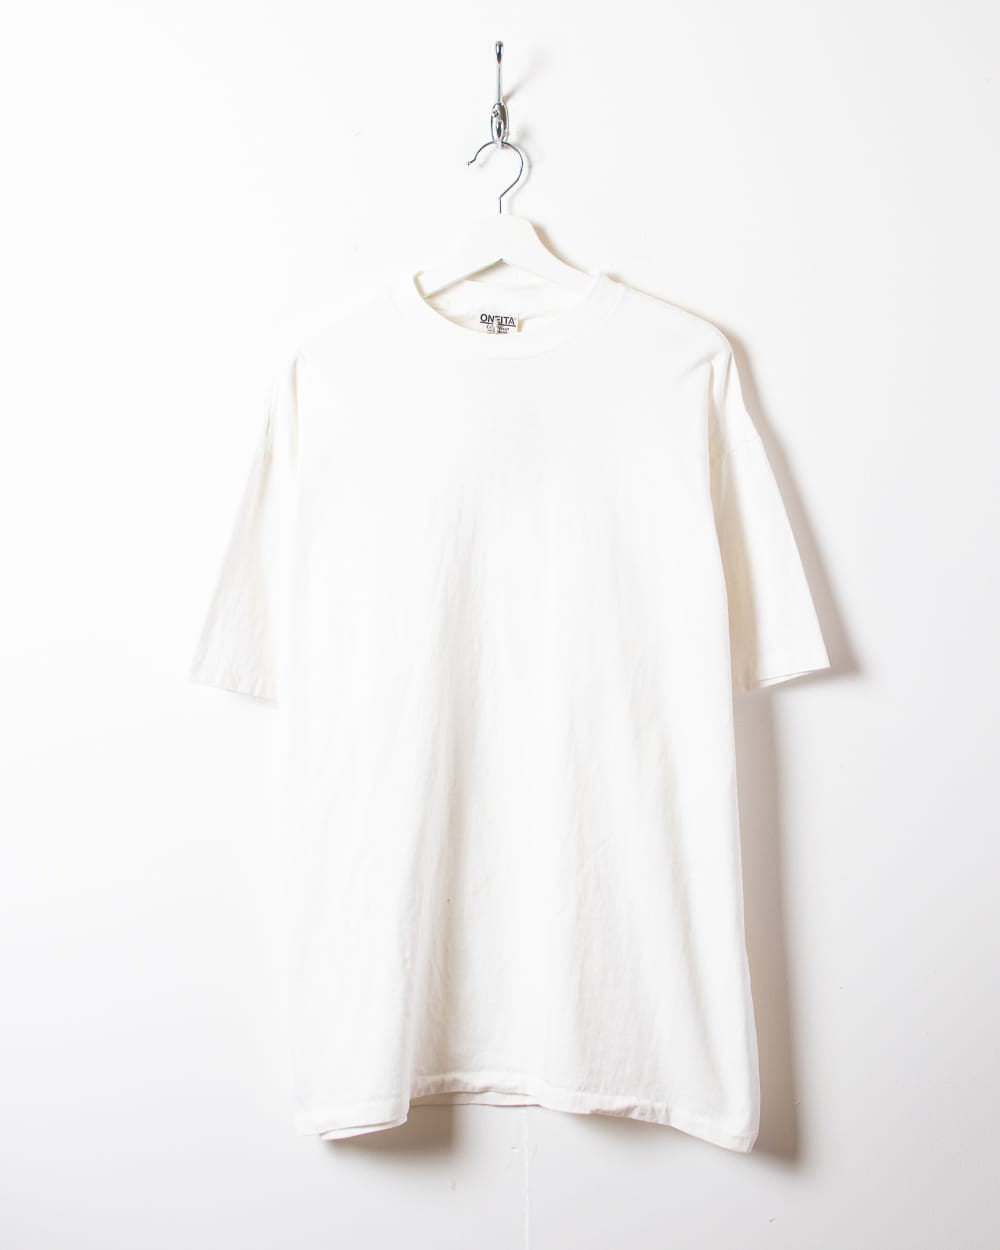 White Plain White Single Stitch T-Shirt - XX-Large